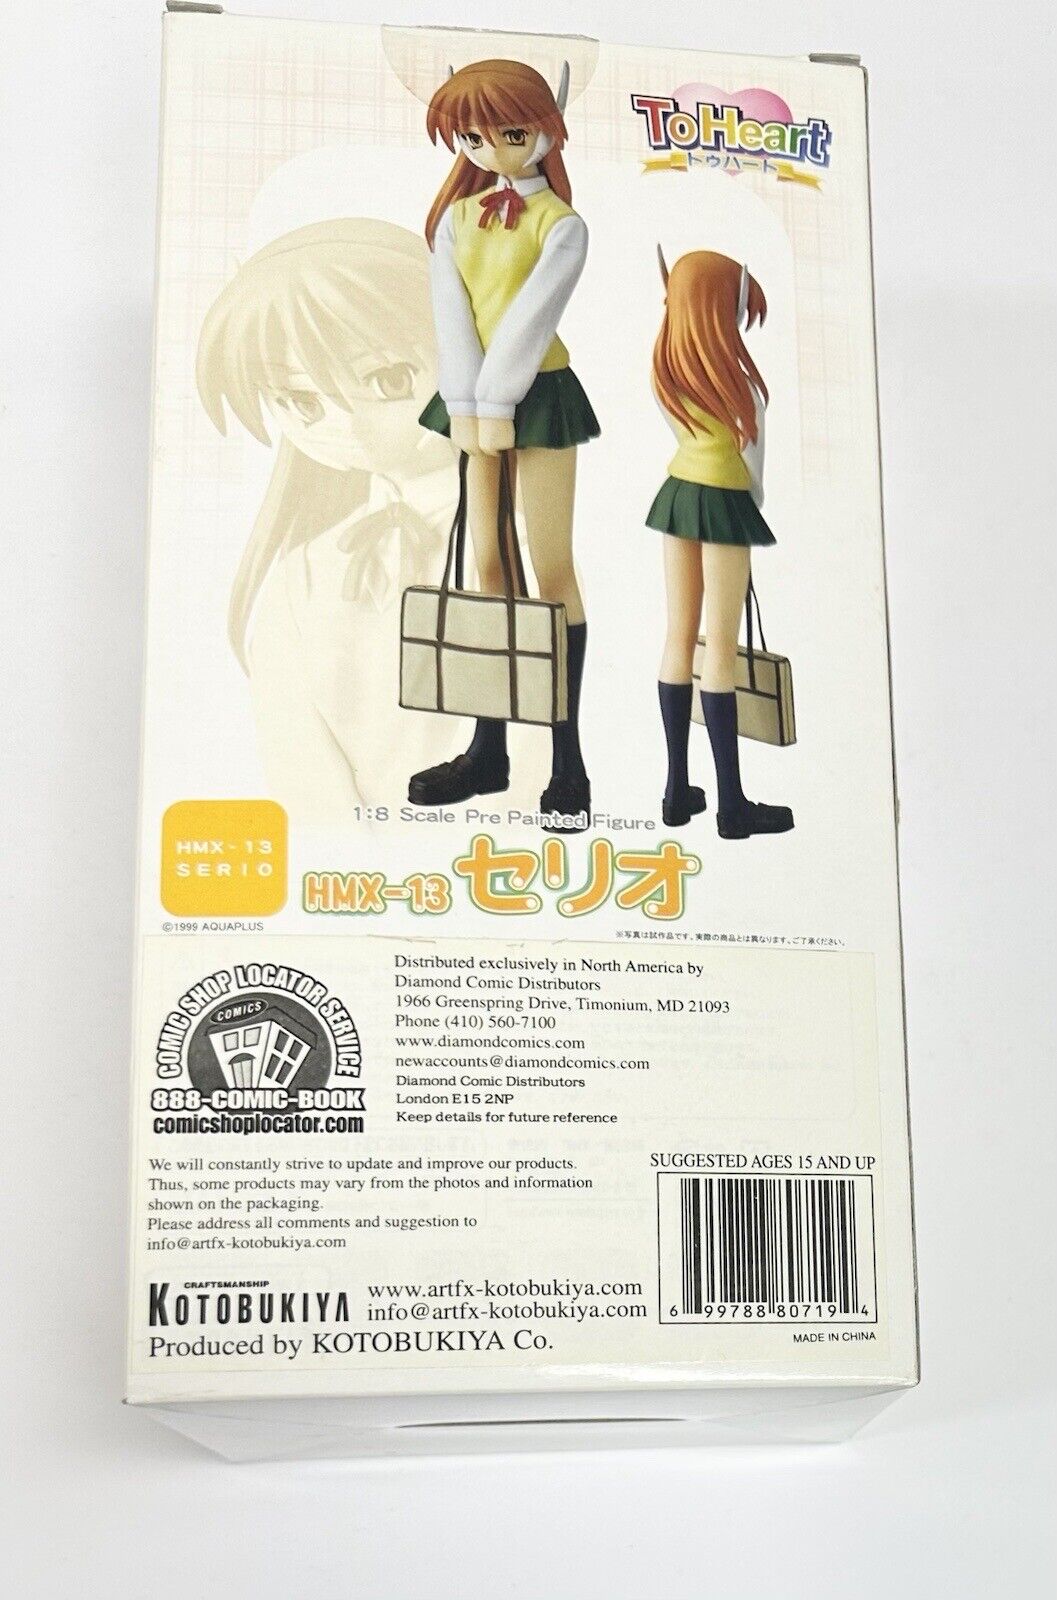 Kotobukiya Japan - To Heart Serio Anime Figure- HMX-13 - Scale 1/8 - FREE POST!